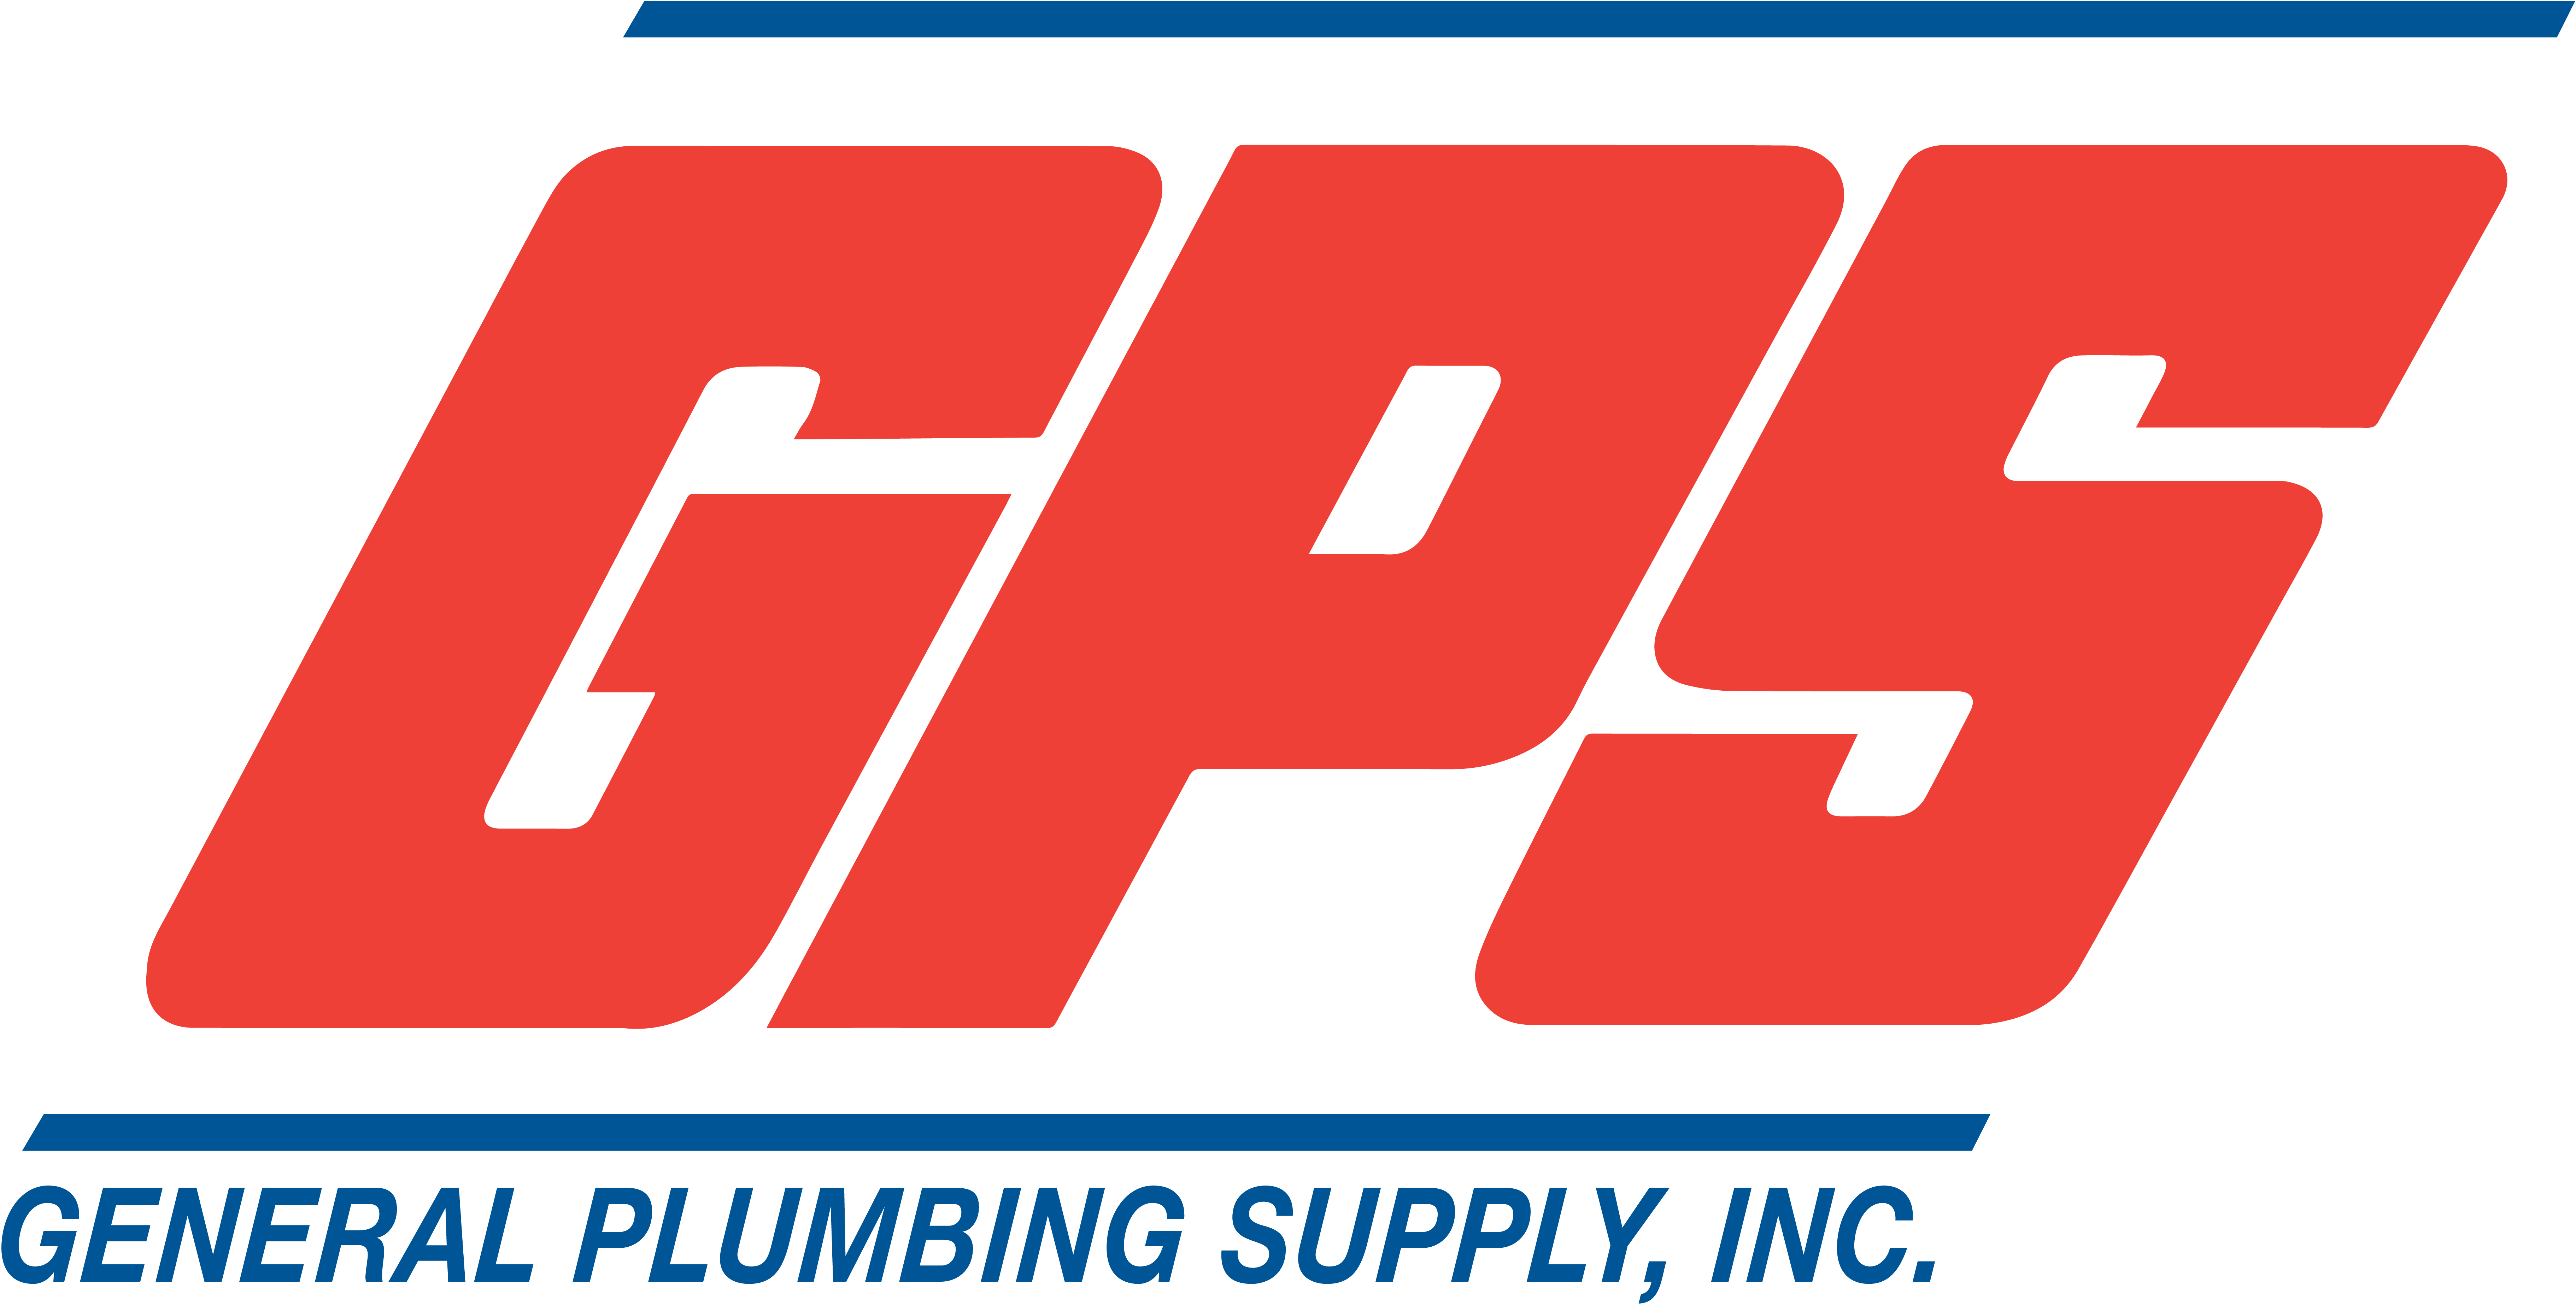 General Plumbing Supply, Inc.